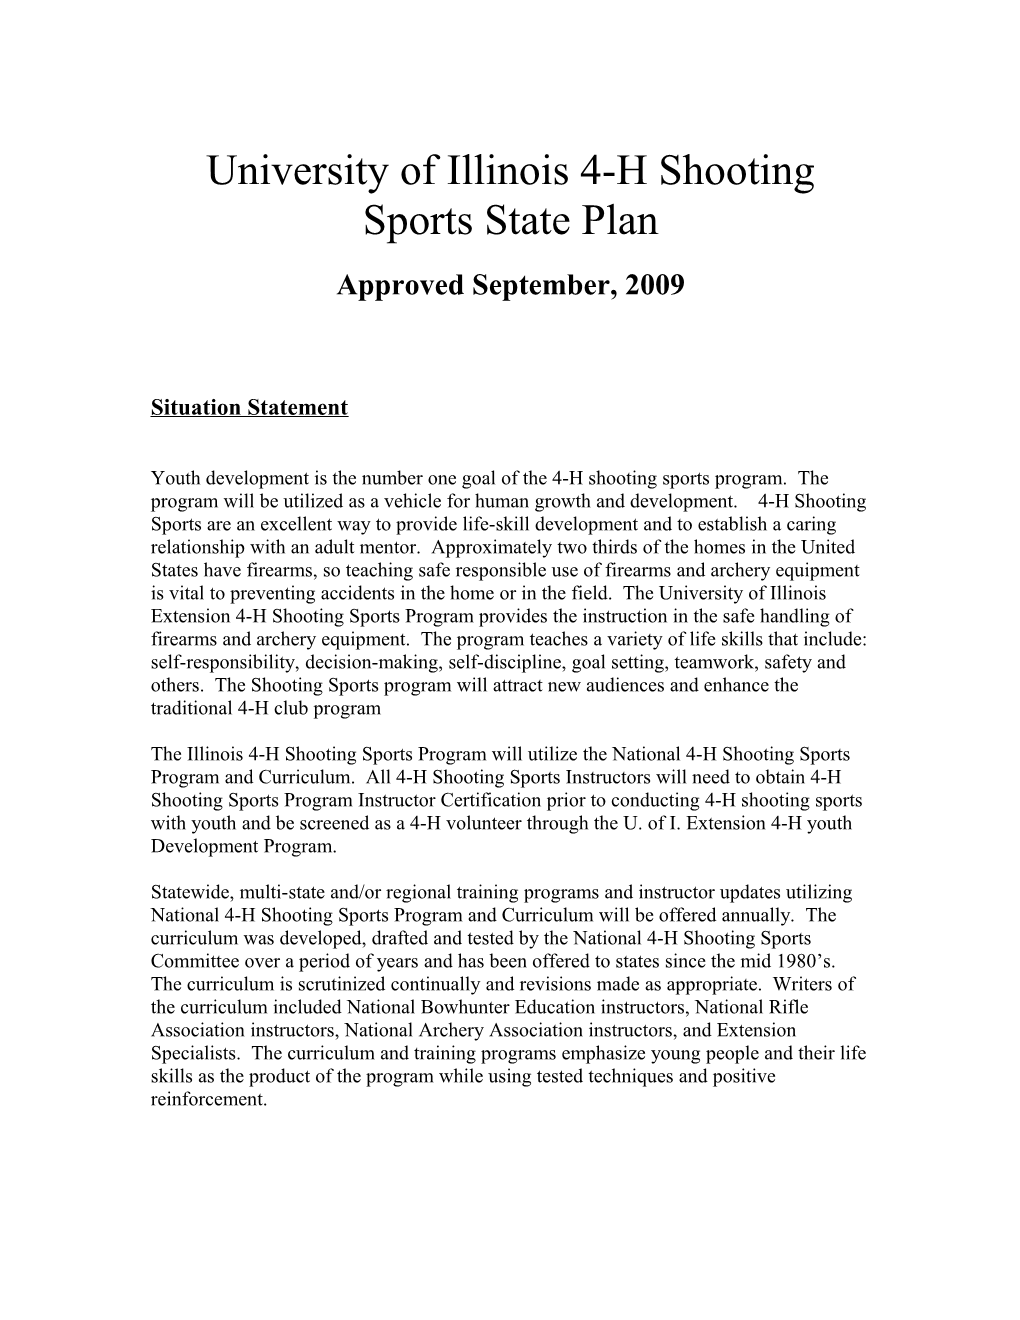 University of Illinois Shooting Sports State Plan